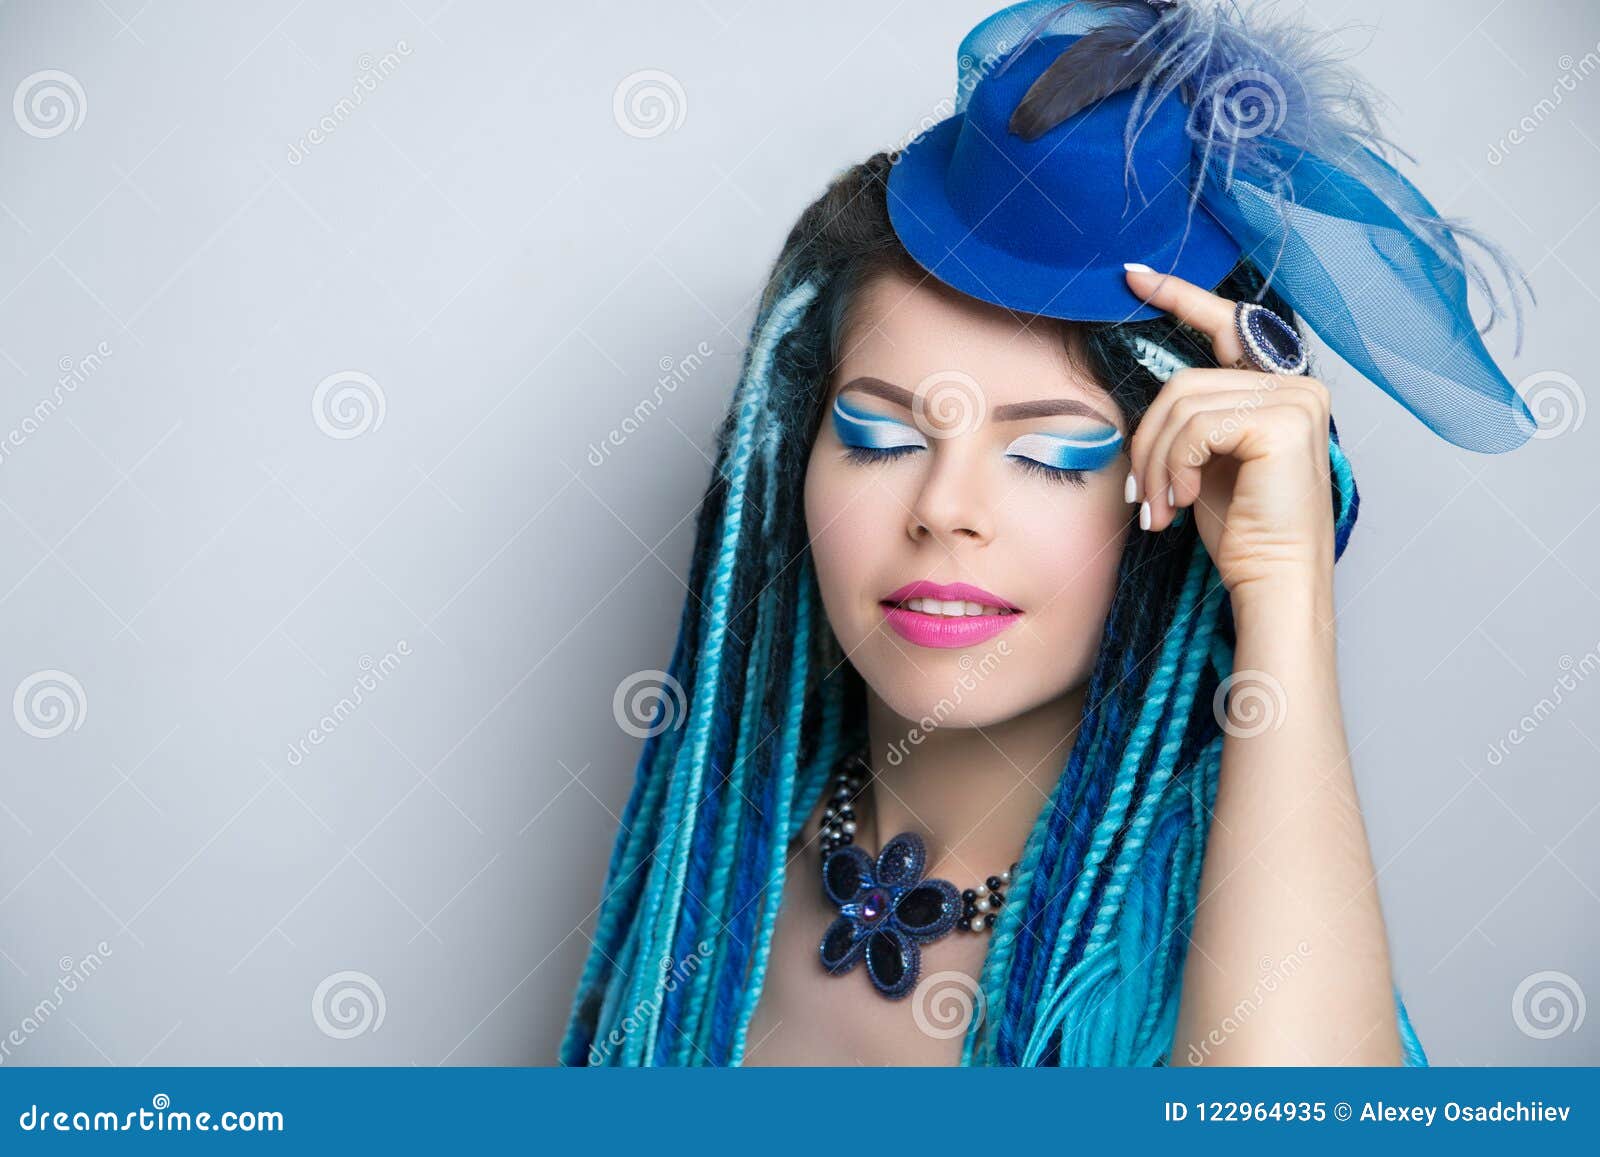 Wonan Hair Dreadlocks Braided Stock Image Image Of Future